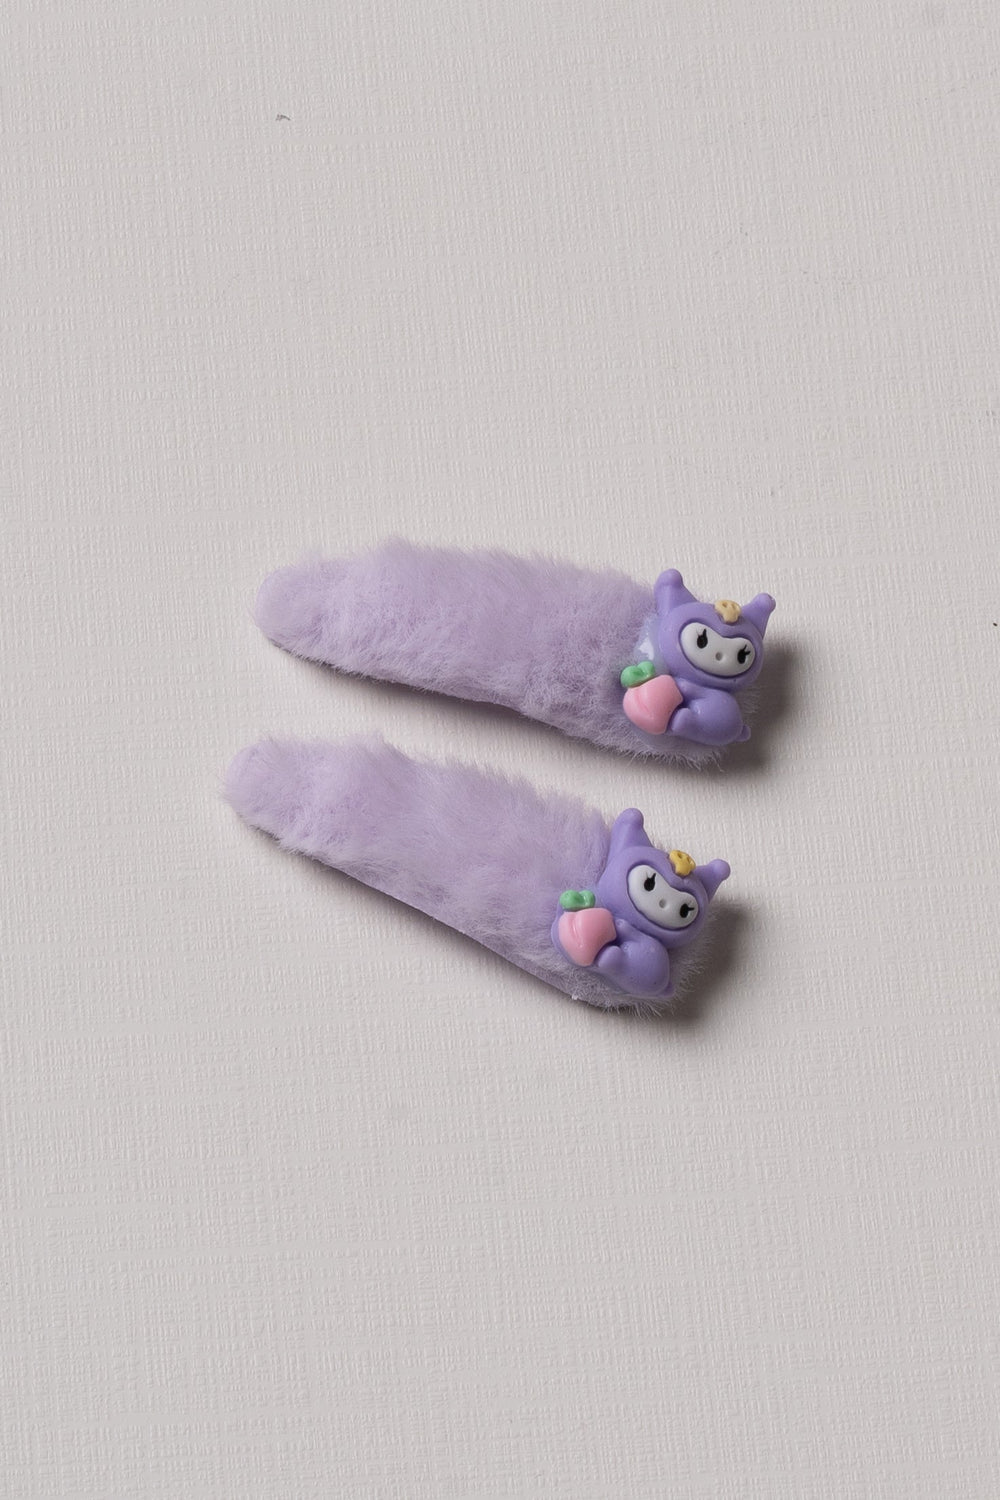 The Nesavu Tick Tac Clip Lavender Dream Fuzzy Tick Tac Clips Nesavu Purple / Style 1 JHTT16A Children's Lavender Fuzzy Animal Tick Tac Clips | Soft Hair Accessories | The Nesavu